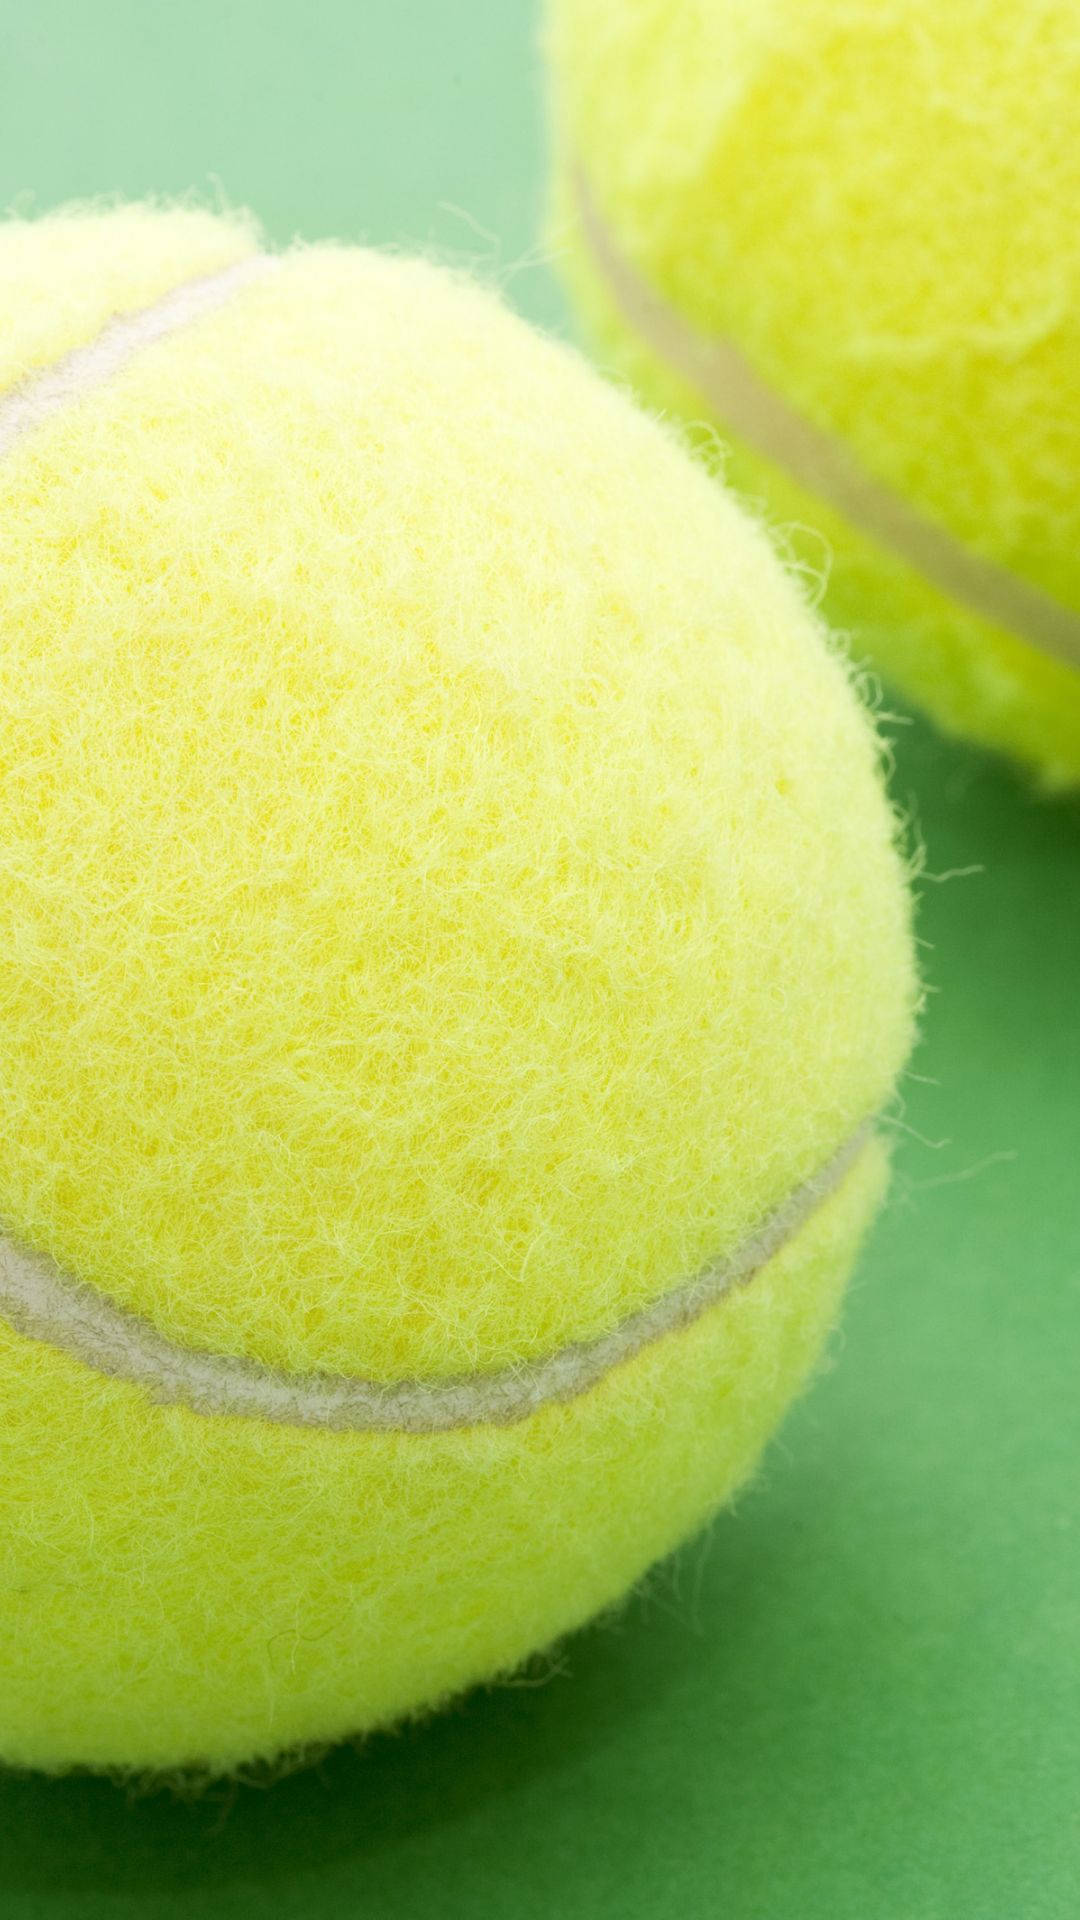 Two Tennis Balls On A Green Surface Wallpaper